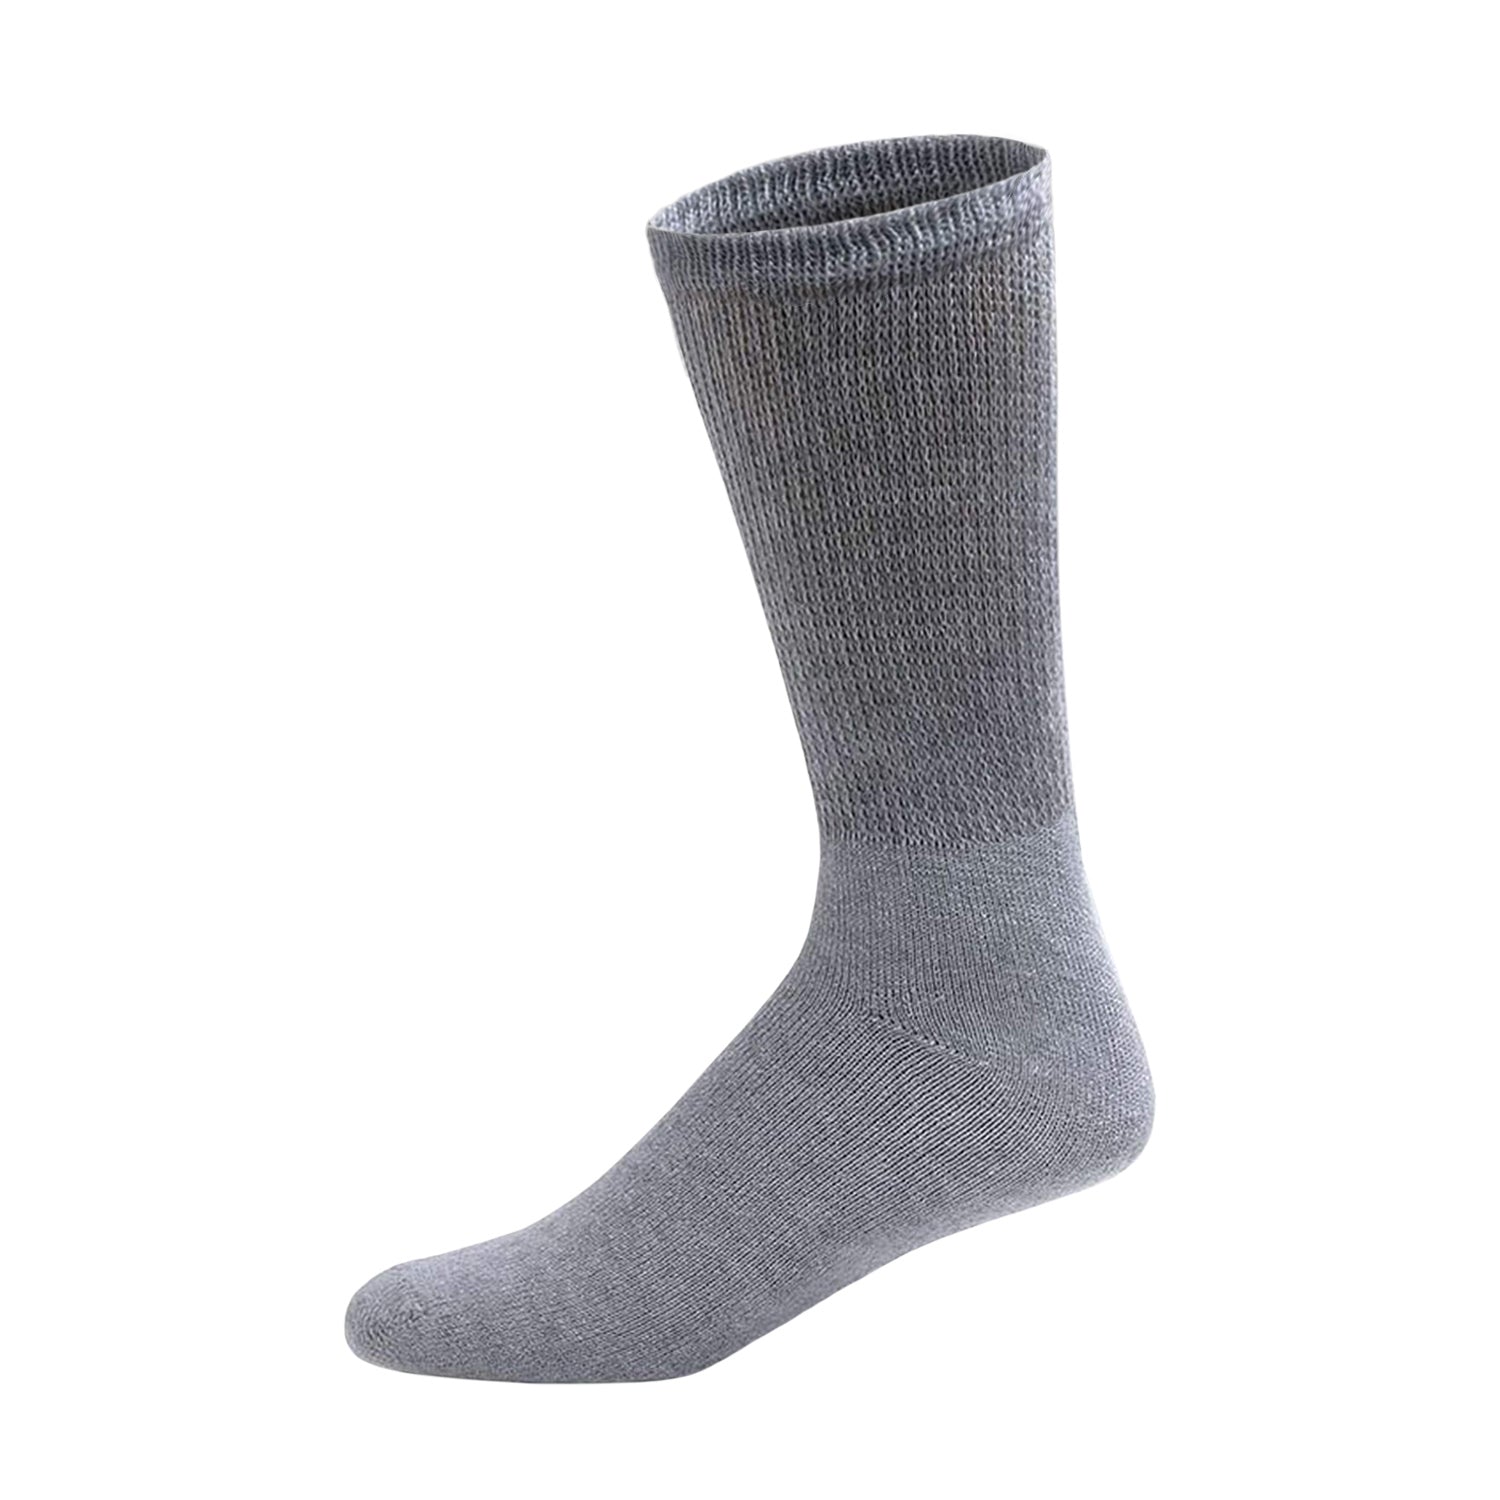 Big and Tall Diabetic Cotton Neuropathy Crew Socks, Size 13-16